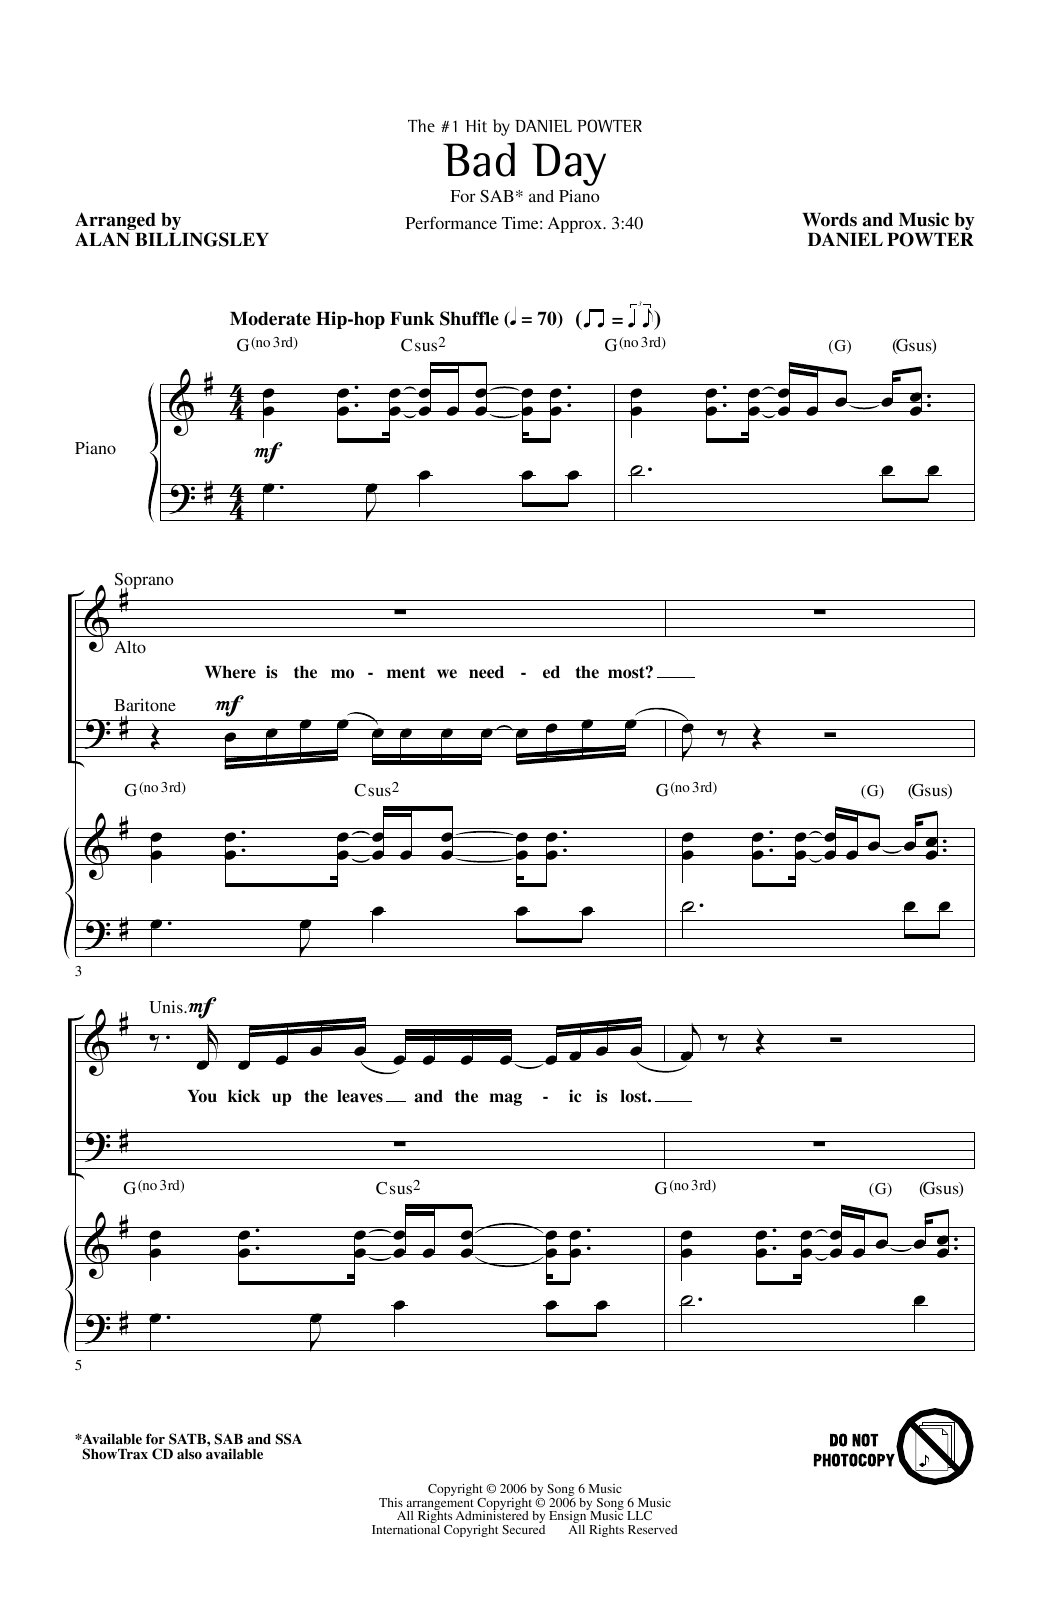 Daniel Powter Bad Day (arr. Alan Billingsley) Sheet Music Notes & Chords for SSA Choir - Download or Print PDF